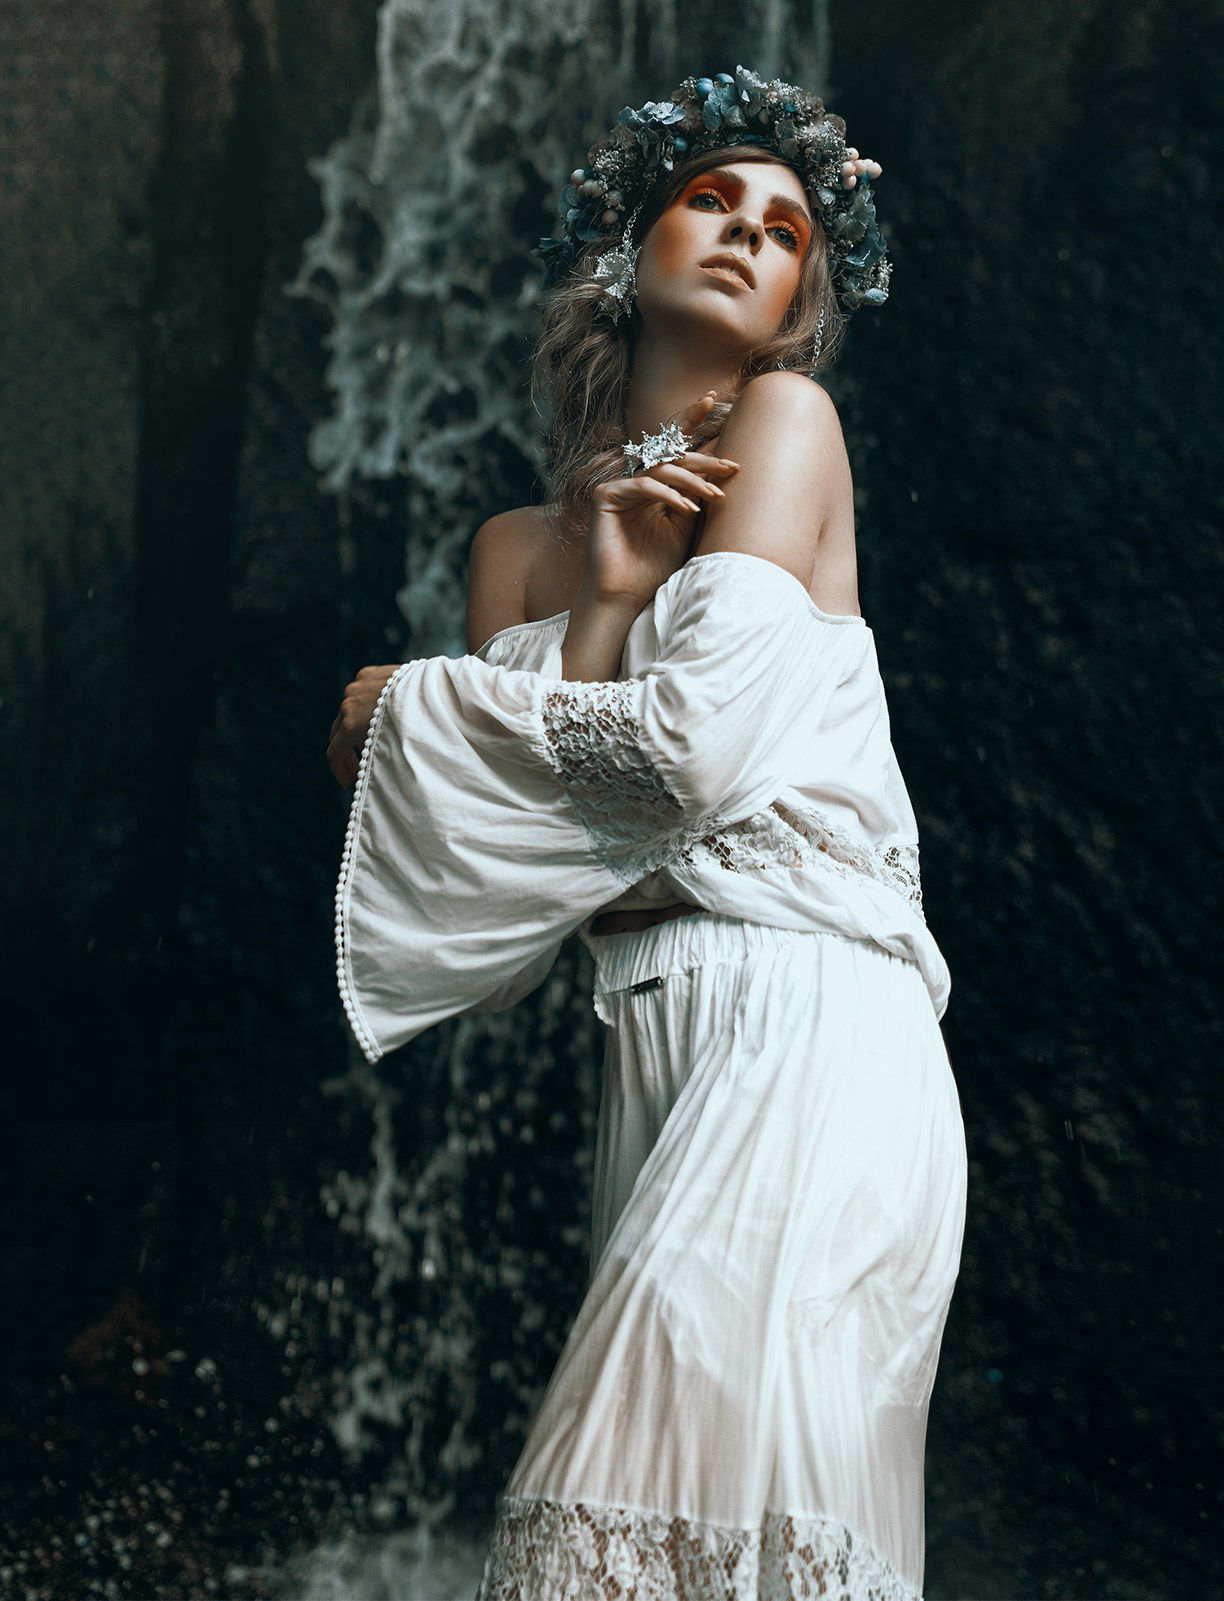 Fine art photography of a model wearing a white dress in waterfalls